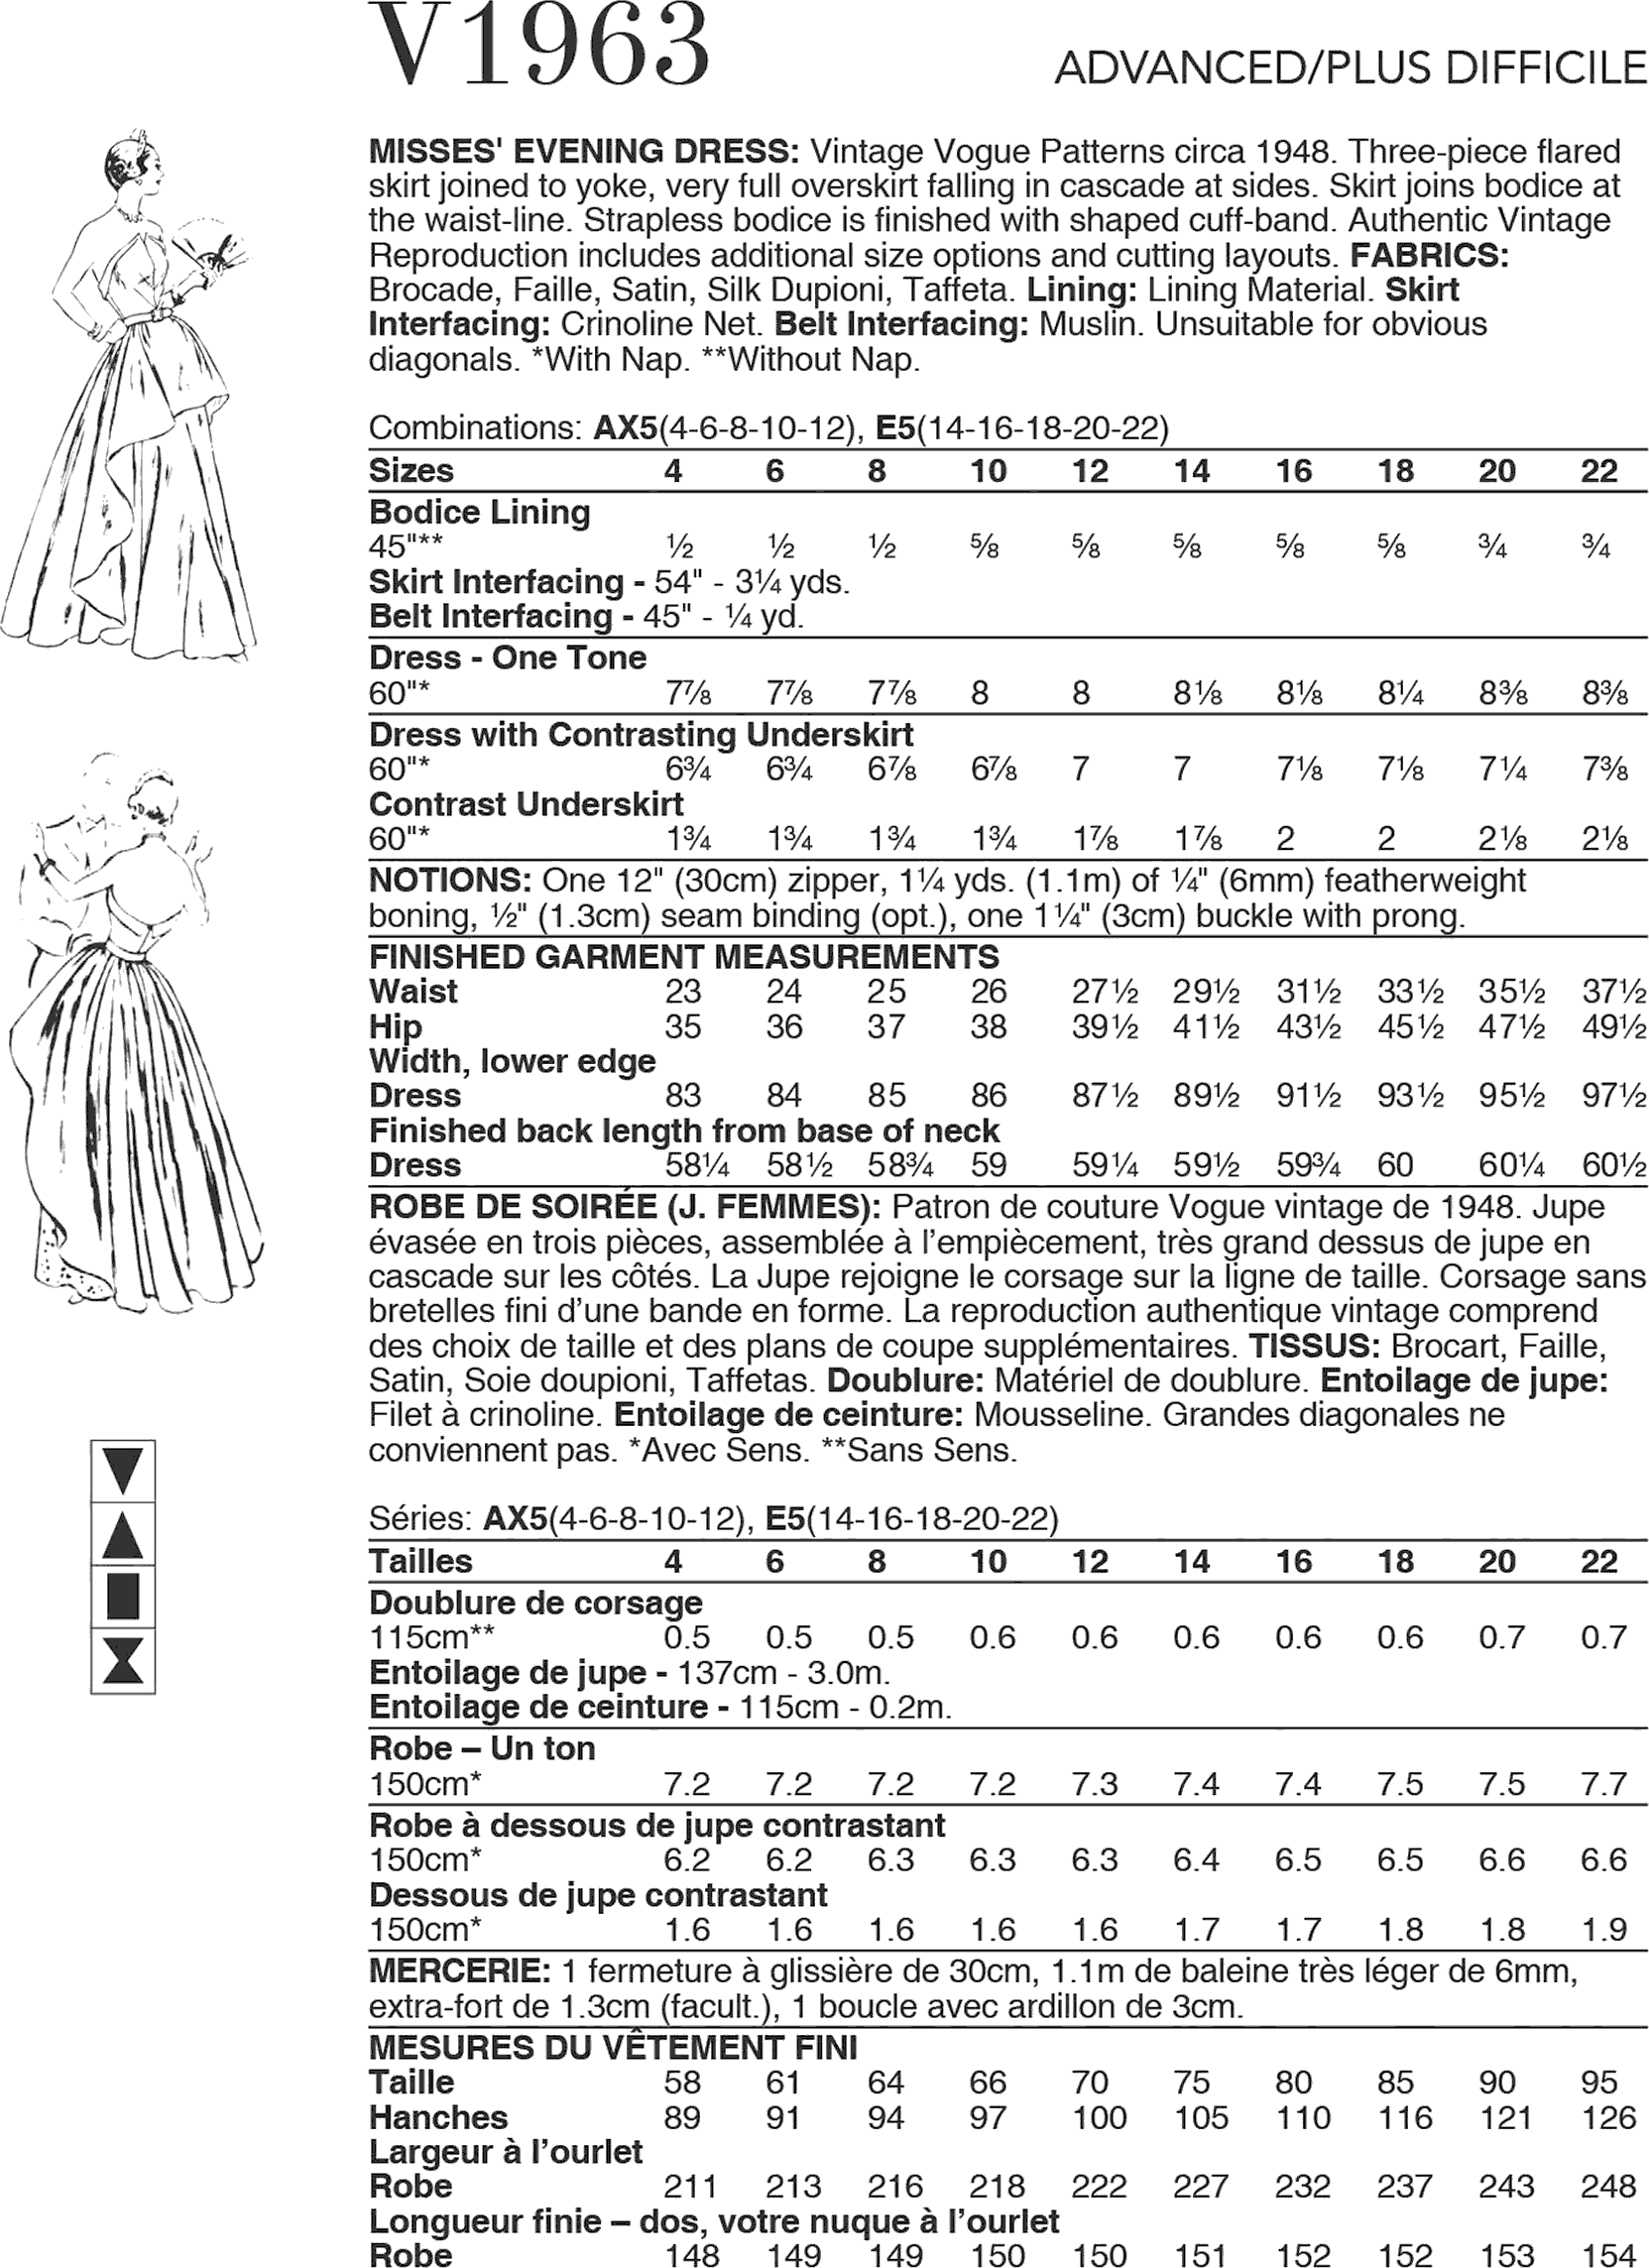 Vogue Pattern V1963 Misses Evening Dress 1963 Fabric Quantity Requirements From Patternsandplains.com